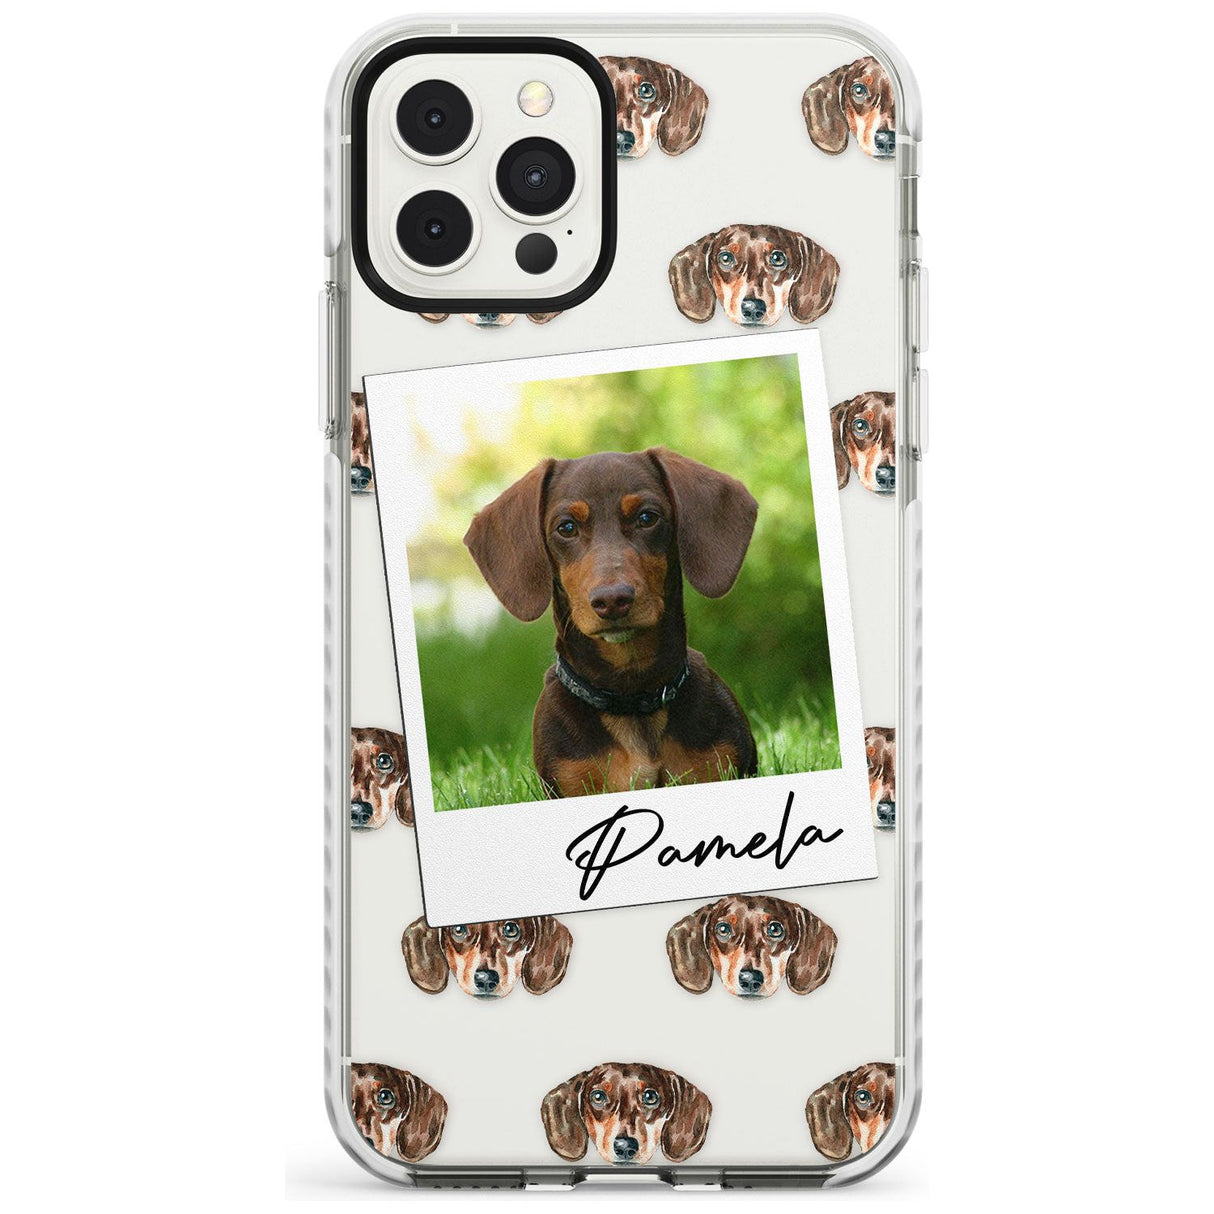 Dachshund, Brown - Custom Dog Photo Slim TPU Phone Case for iPhone 11 Pro Max